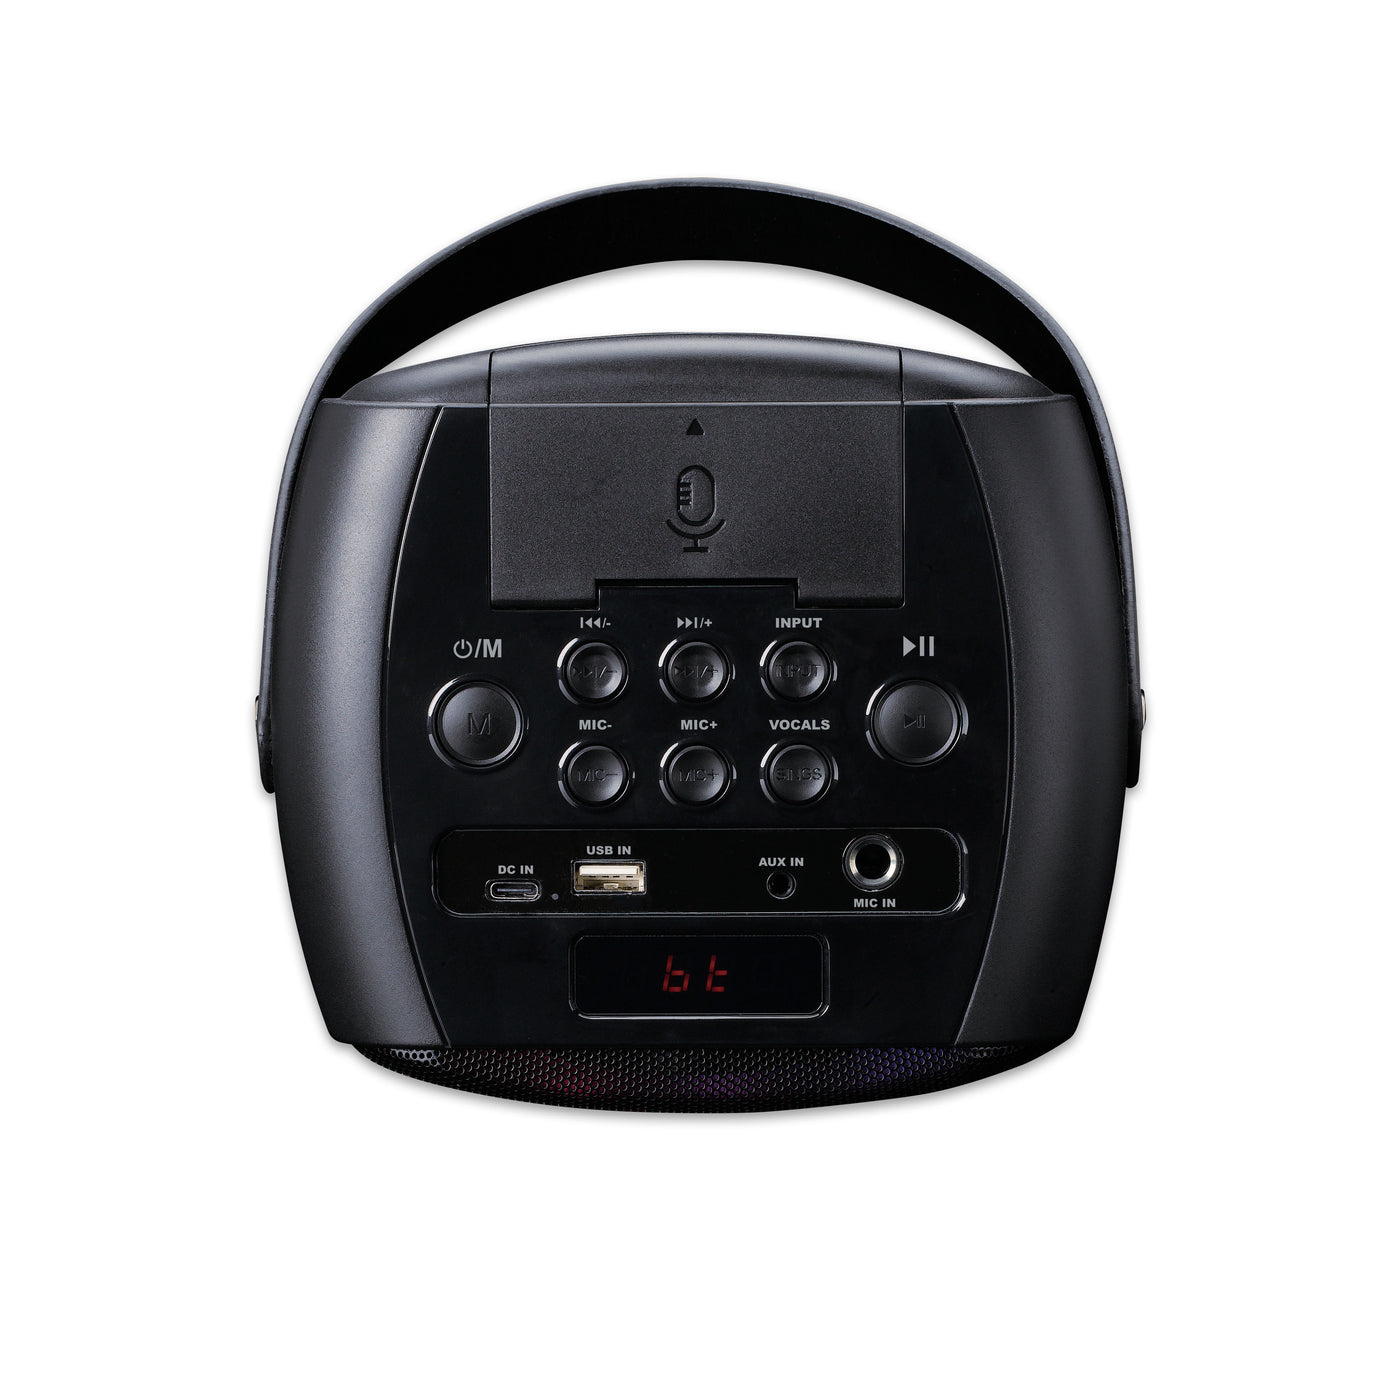 LENCO BTC-060BK - Karaoke system with Bluetooth®, rechargeable battery, wireless karaoke microphone, and disco LED lighting - Black